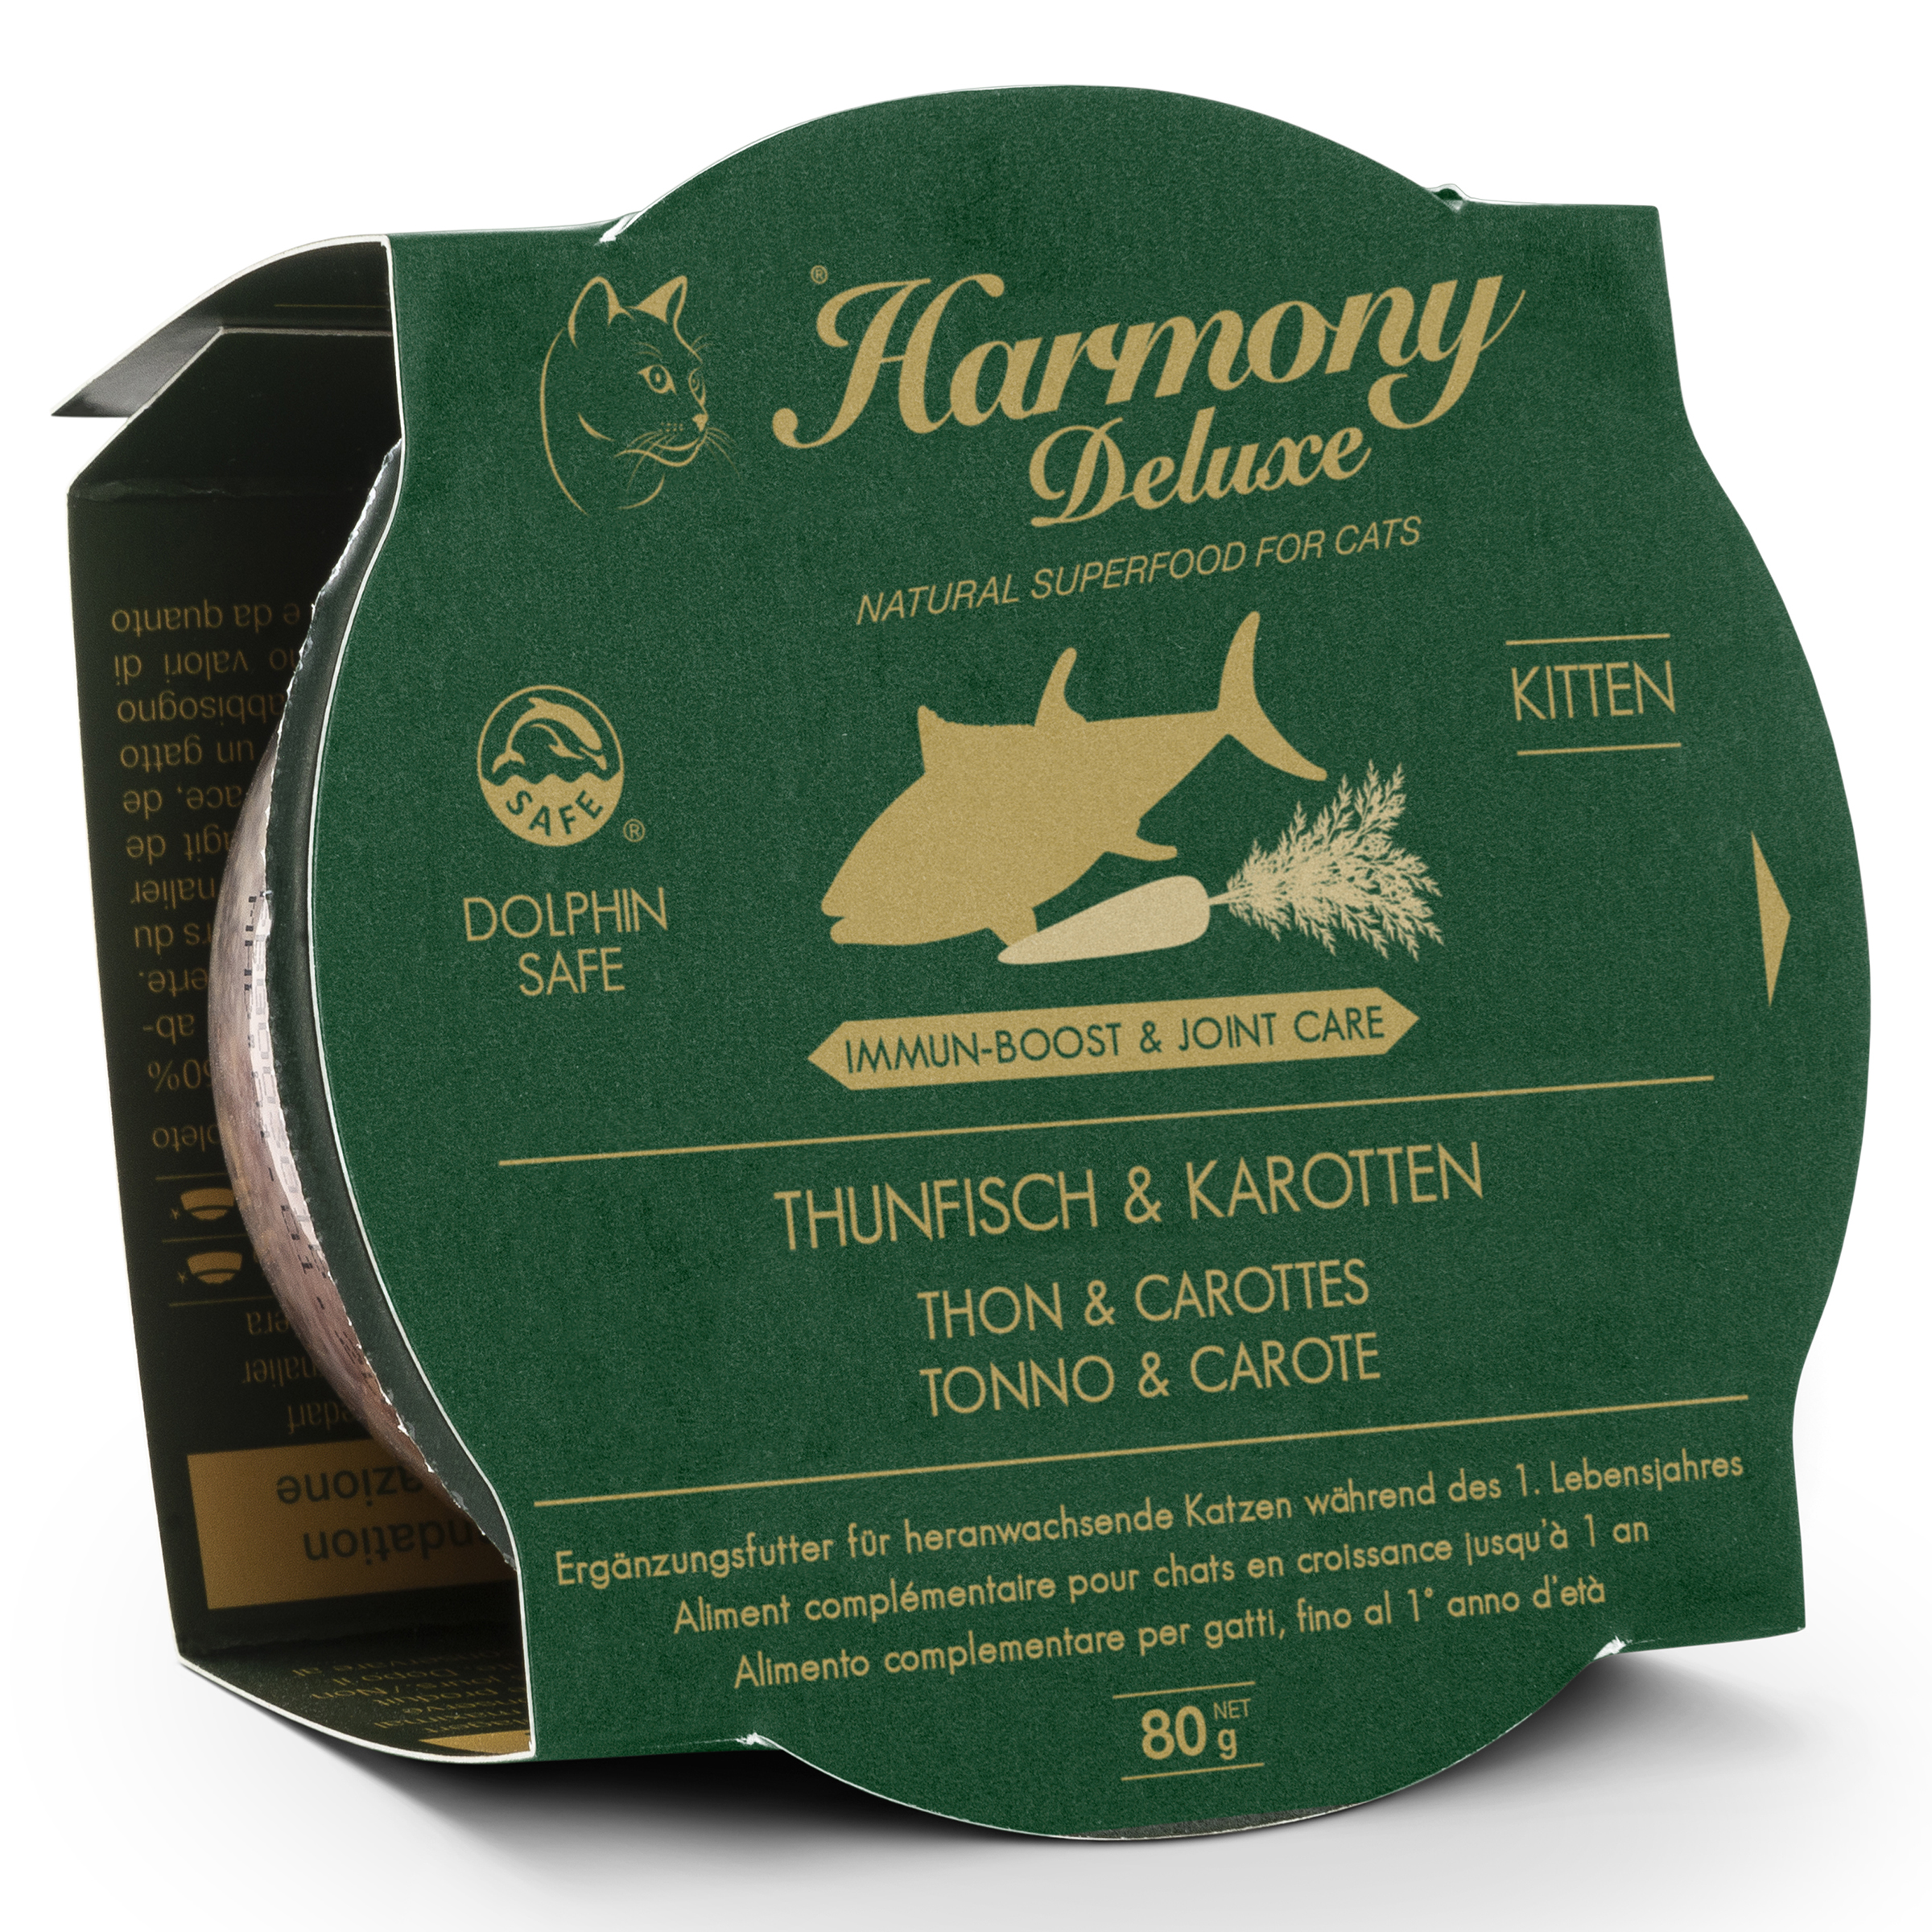 Harmony Cat Deluxe Cup Kitten Thunfisch & Karotten Immun-Boost & Care Katzenfutter